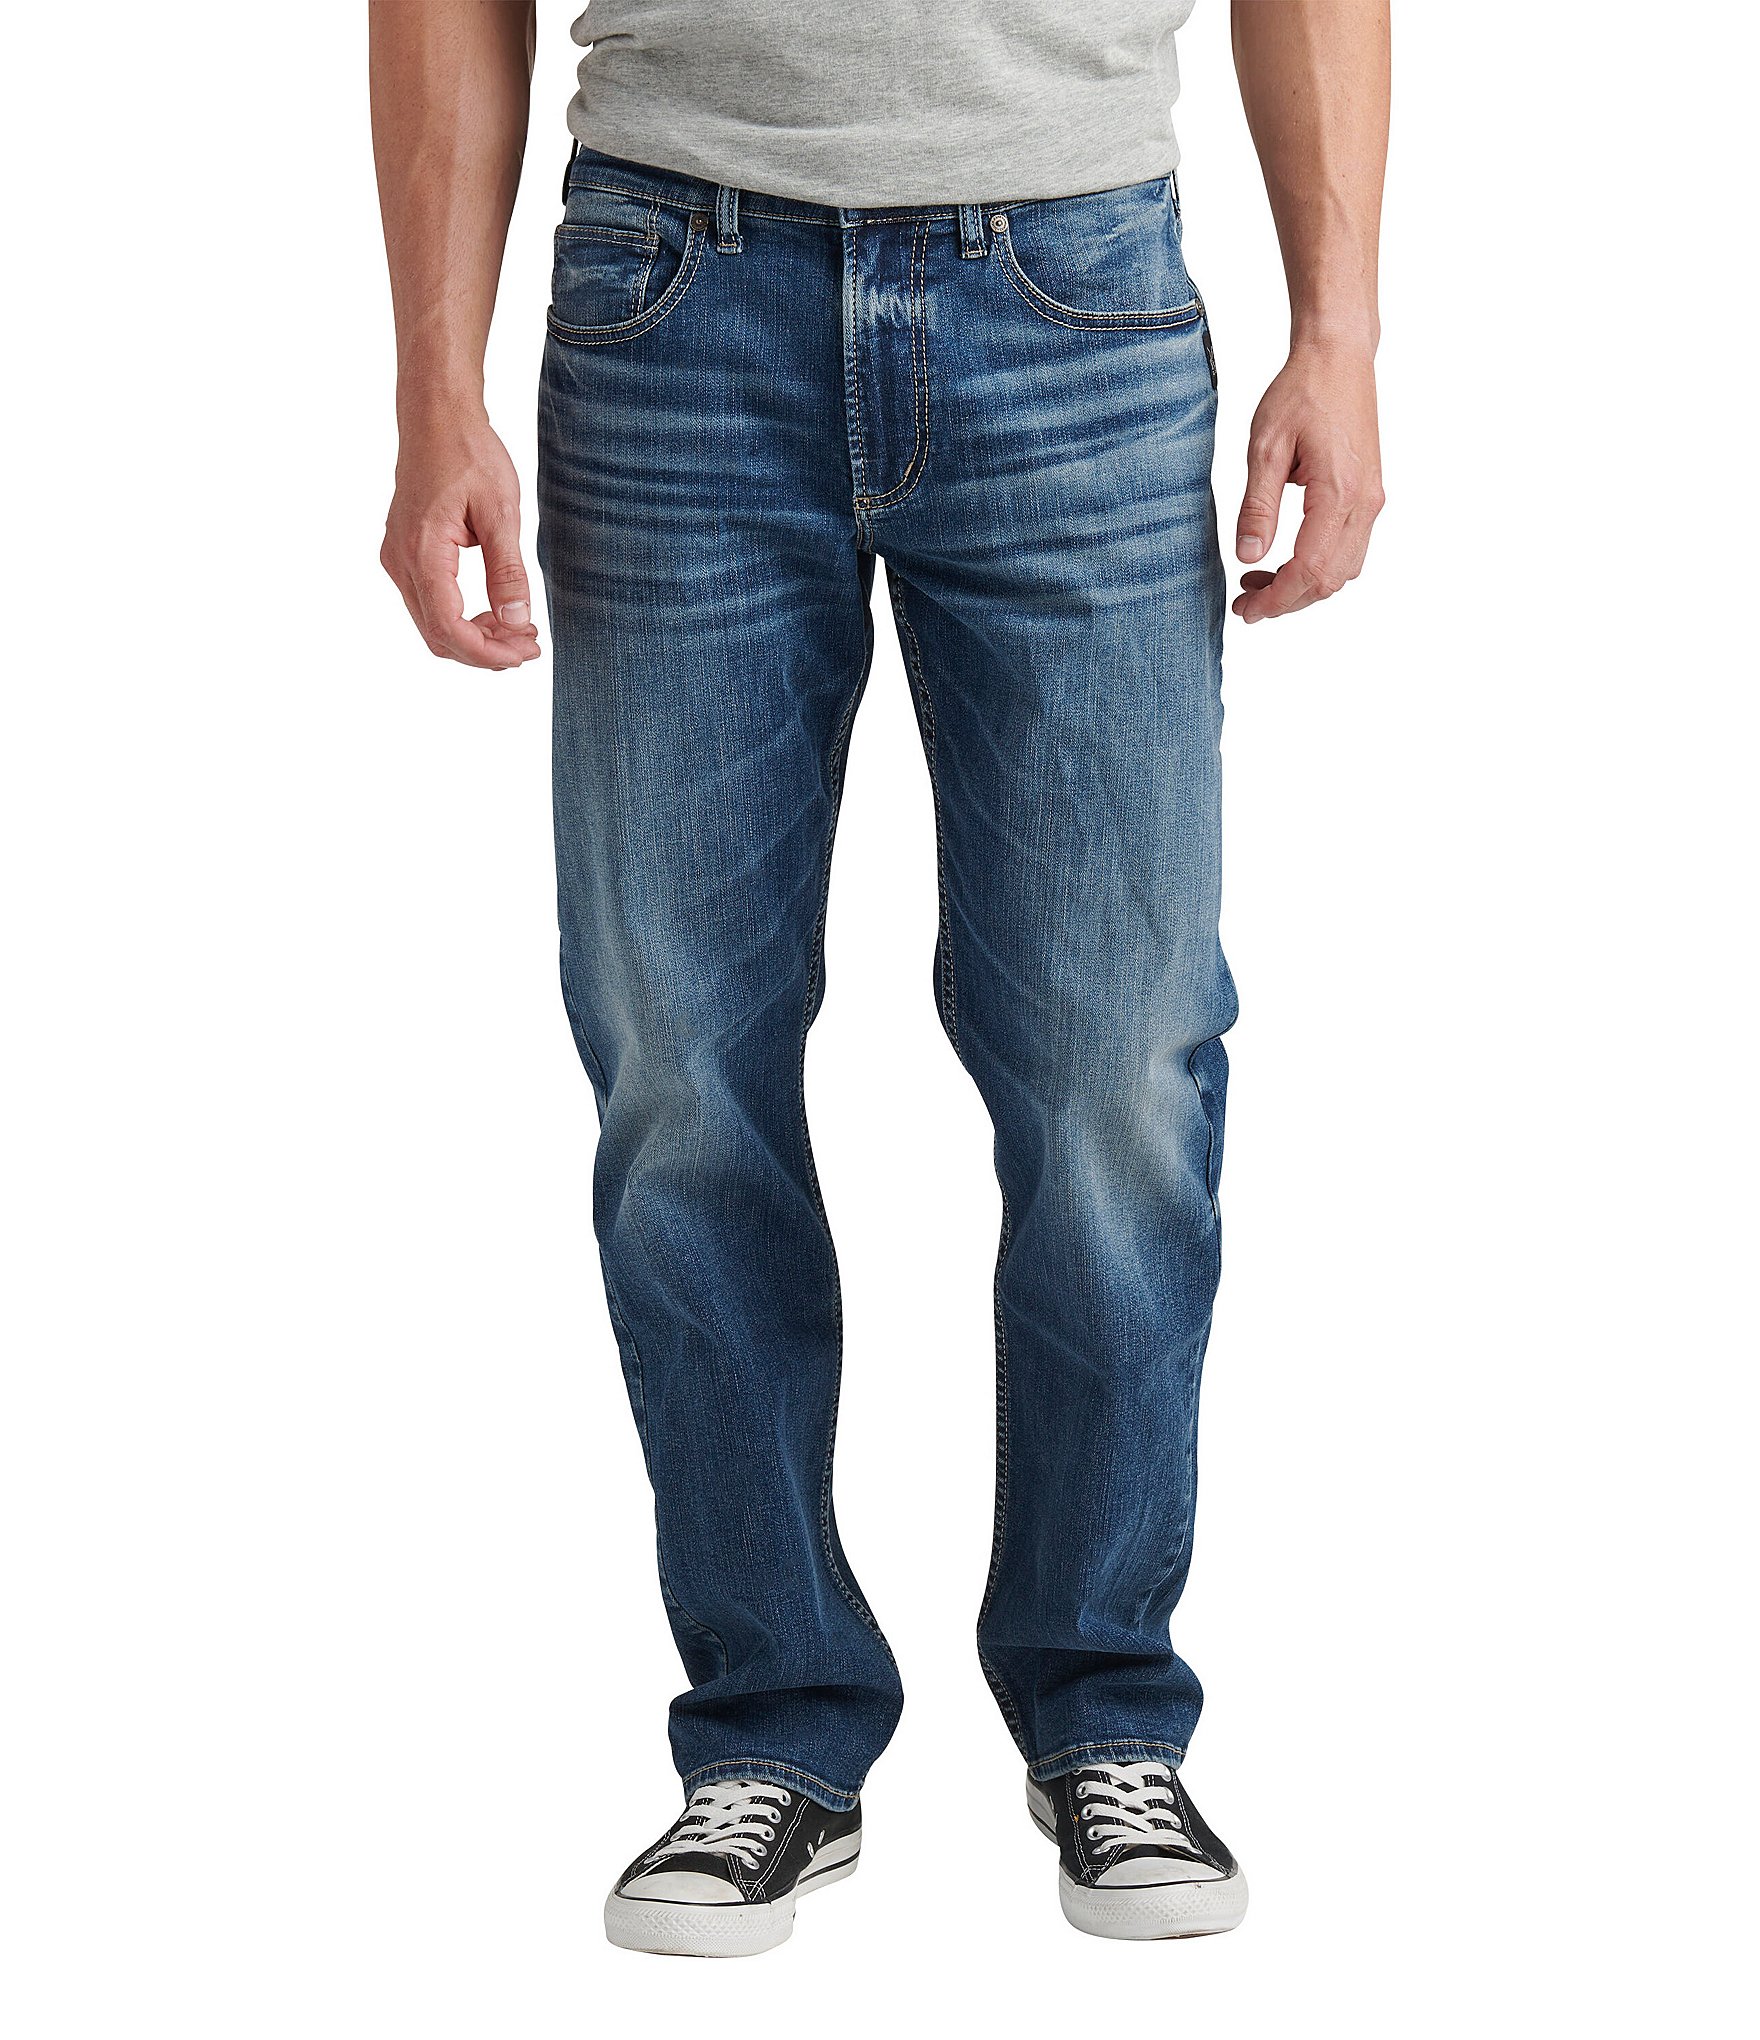 Peserico tapered-leg jeans - Grey